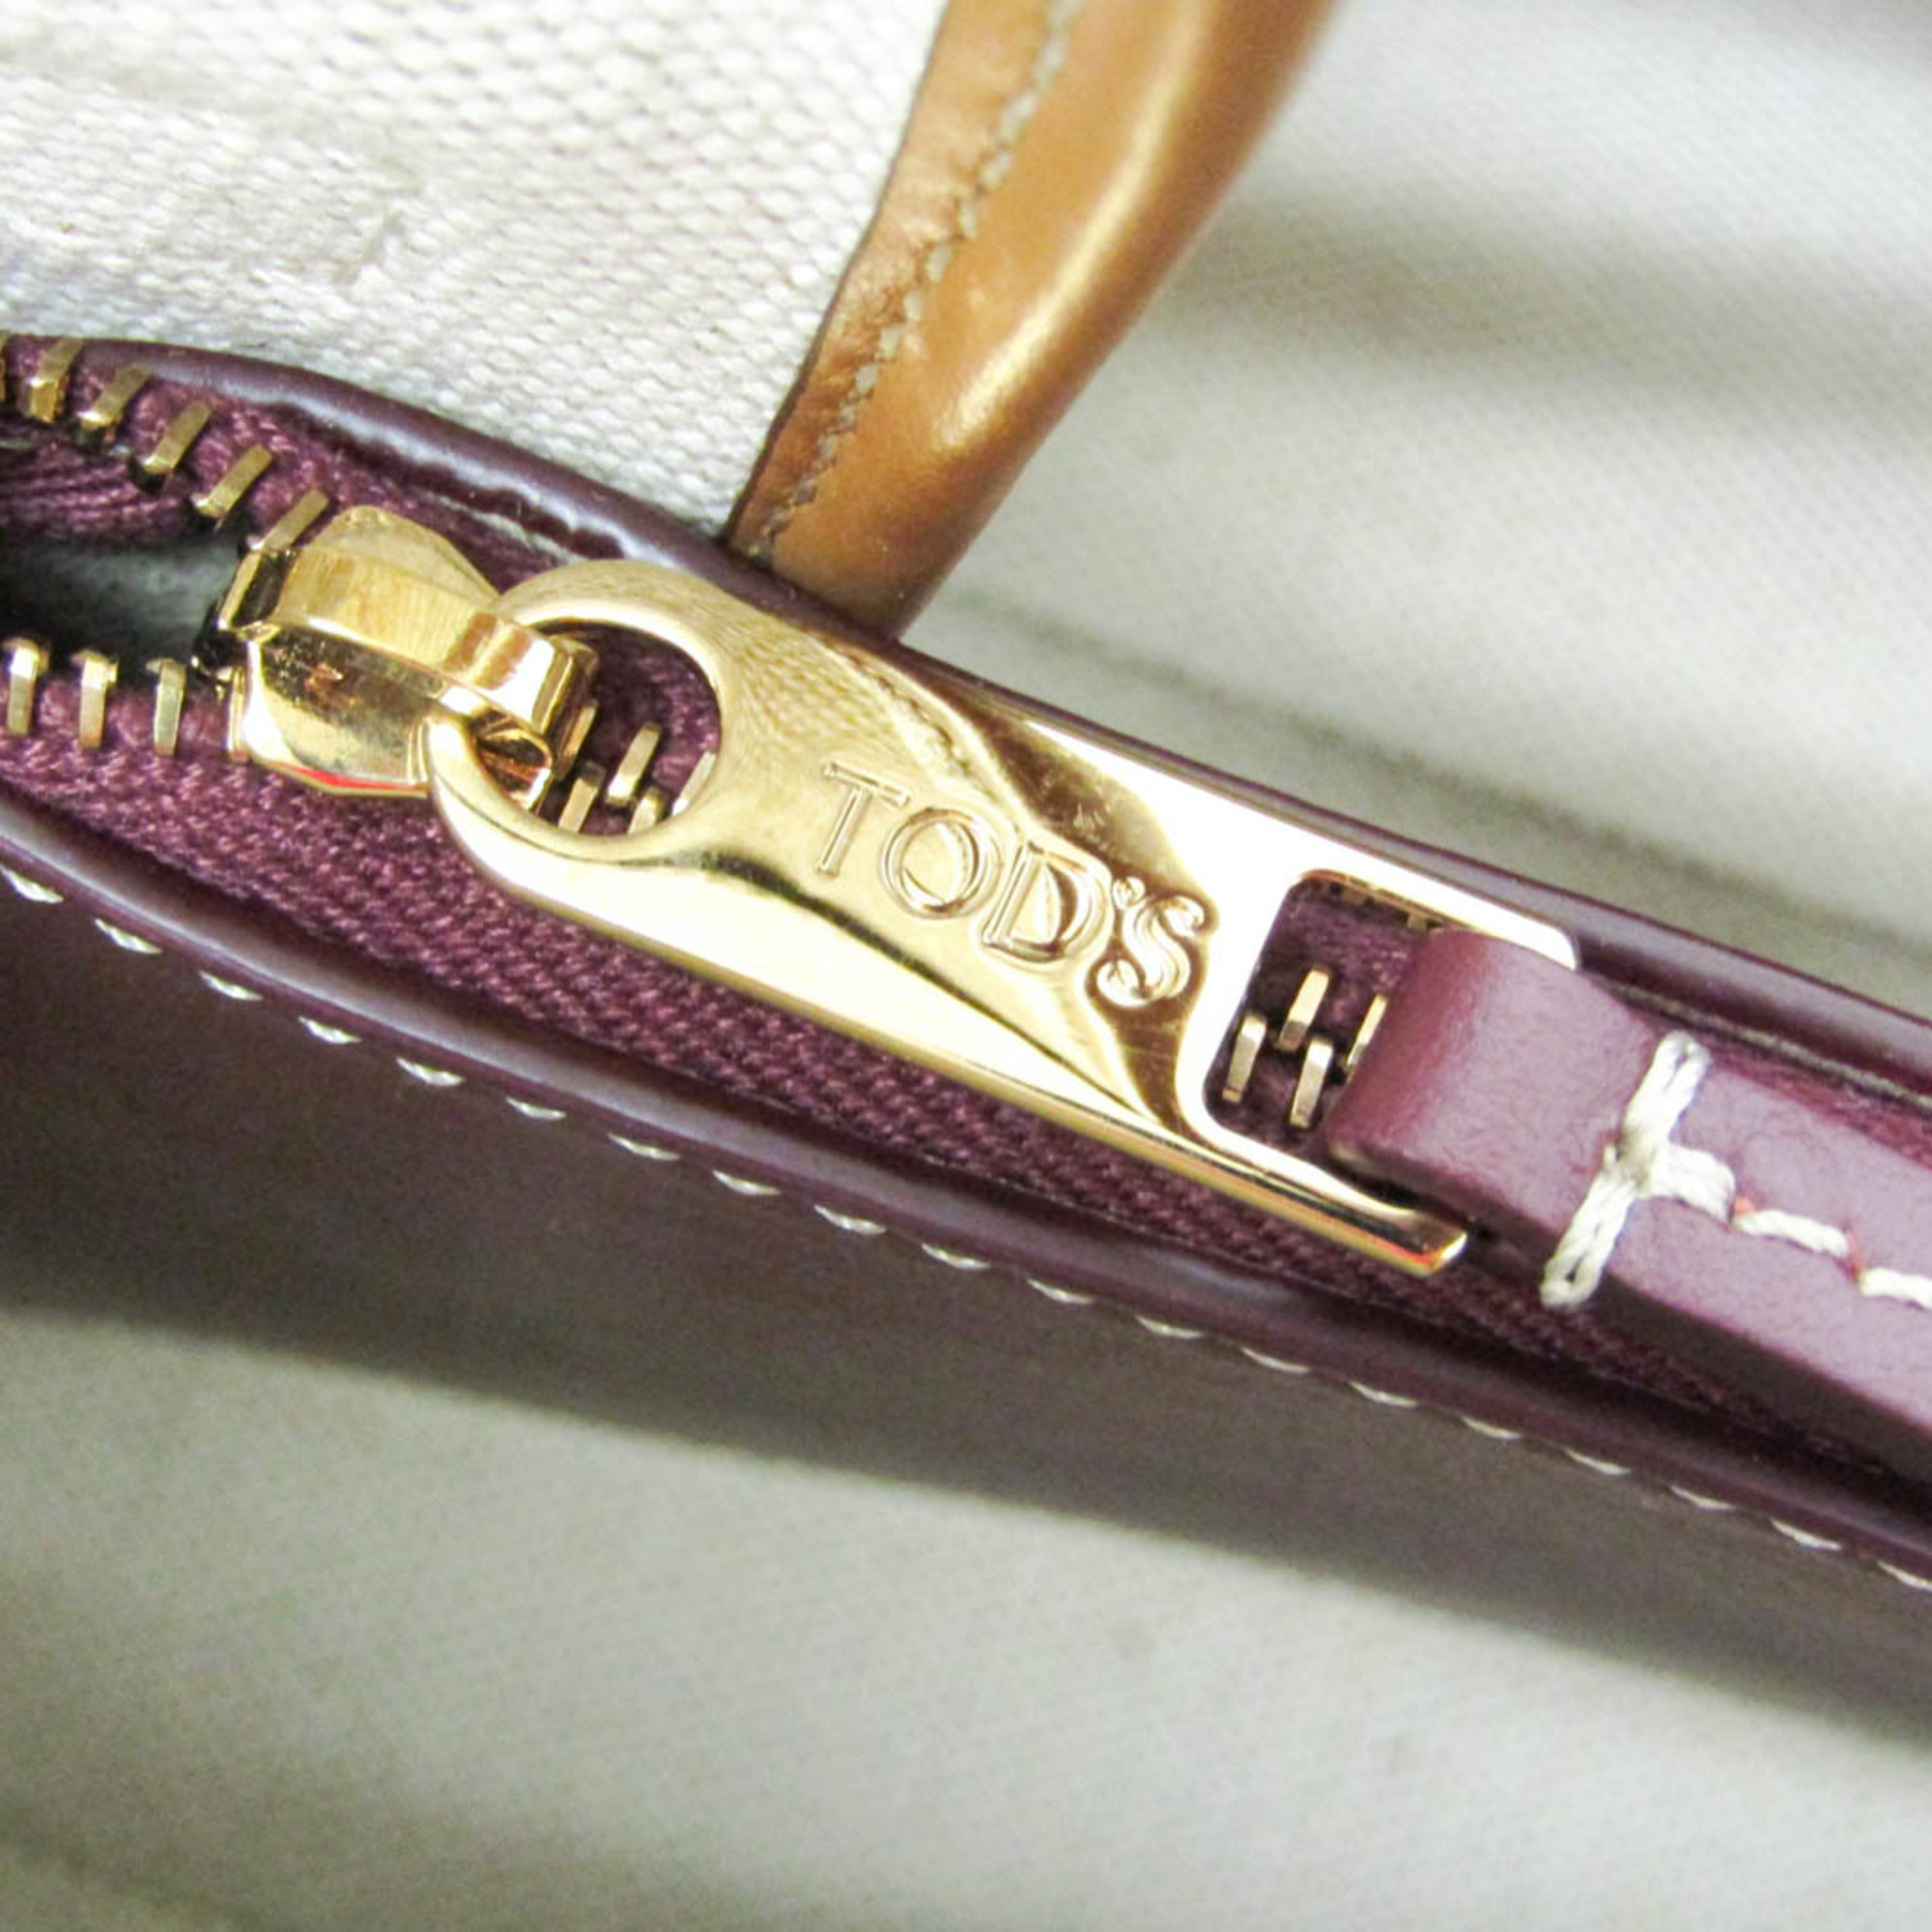 Tod's Micro Women's Leather,Canvas Handbag,Shoulder Bag Beige,Brown